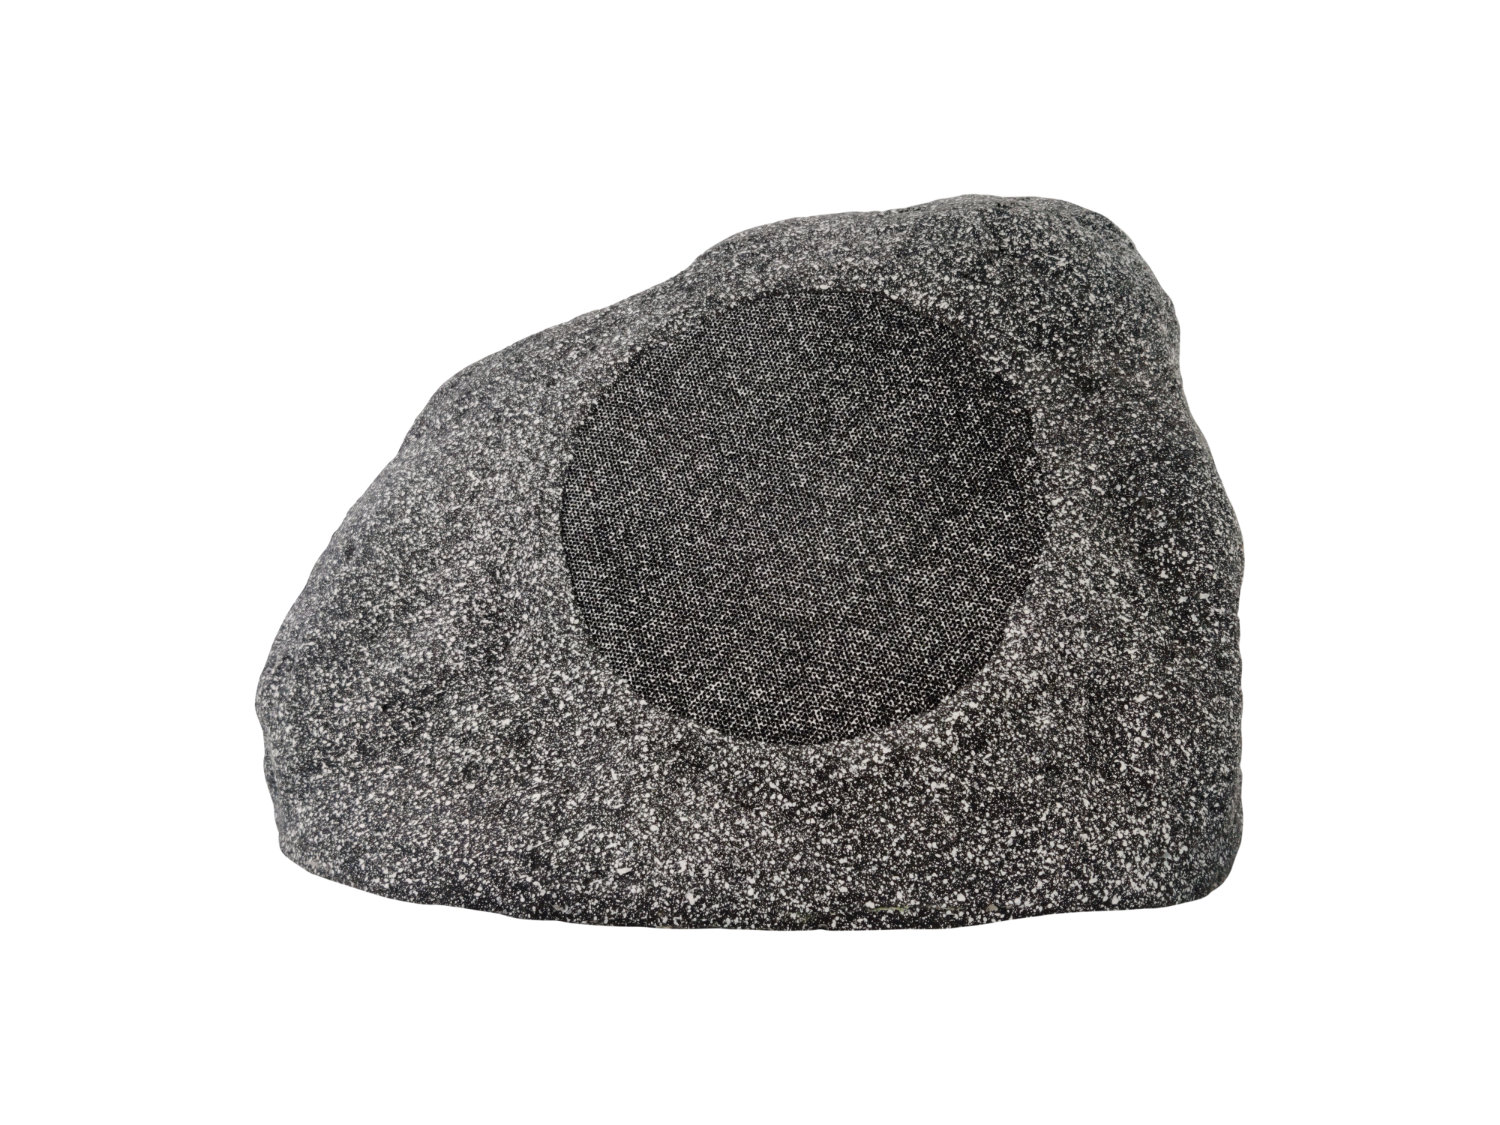 Granite-10 Outdoor Subwoofer